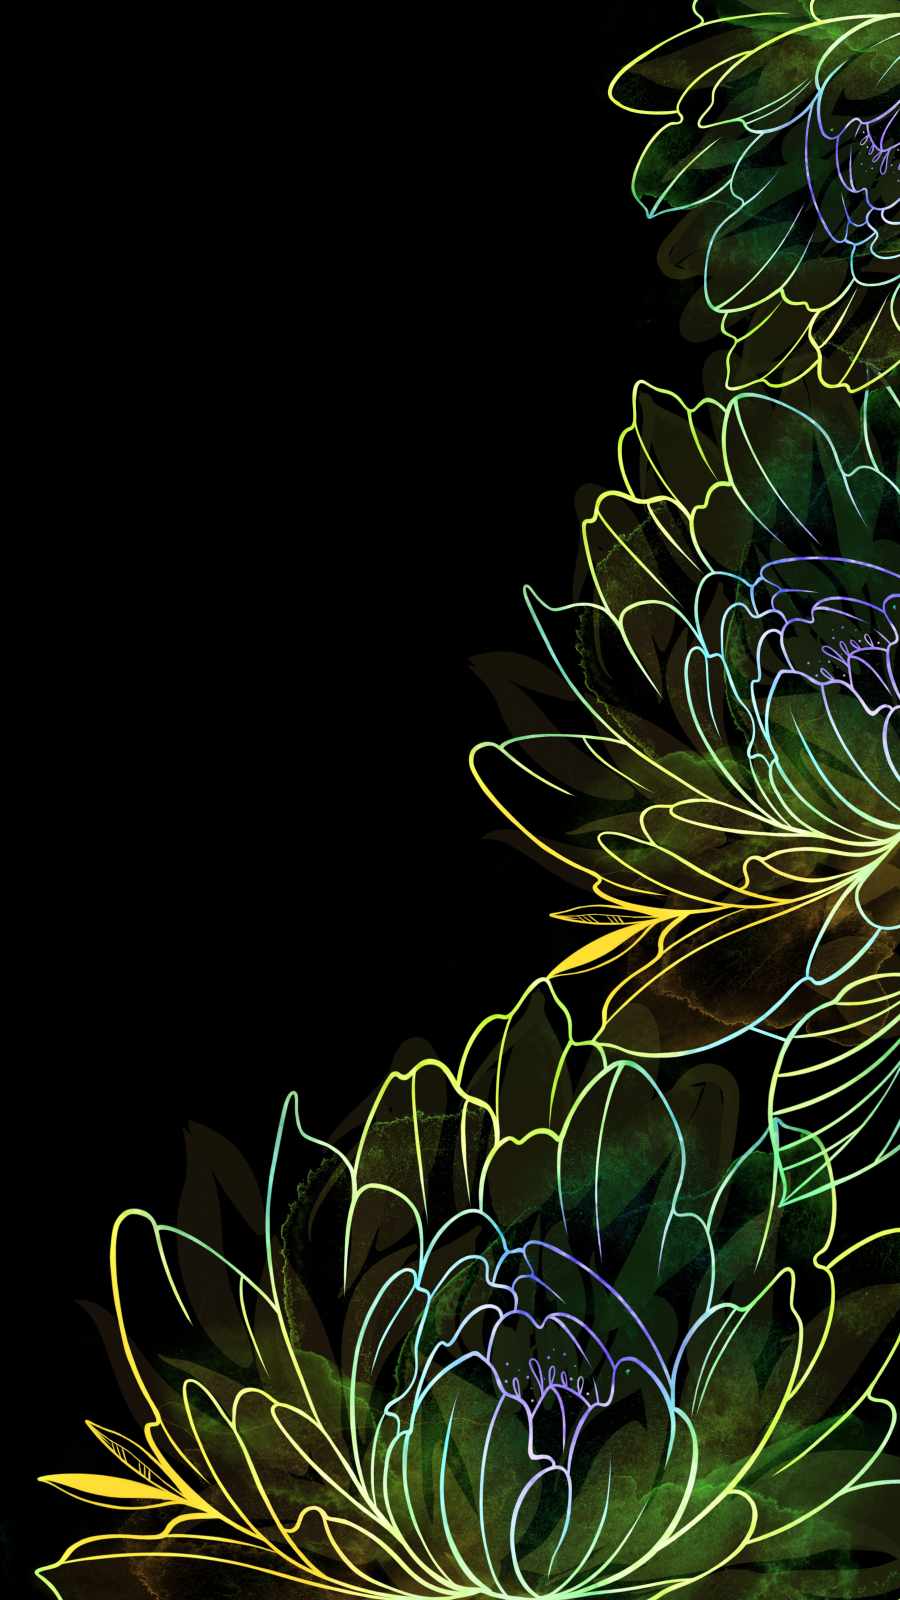 Amoled Flowers 4K iPhone Wallpaper